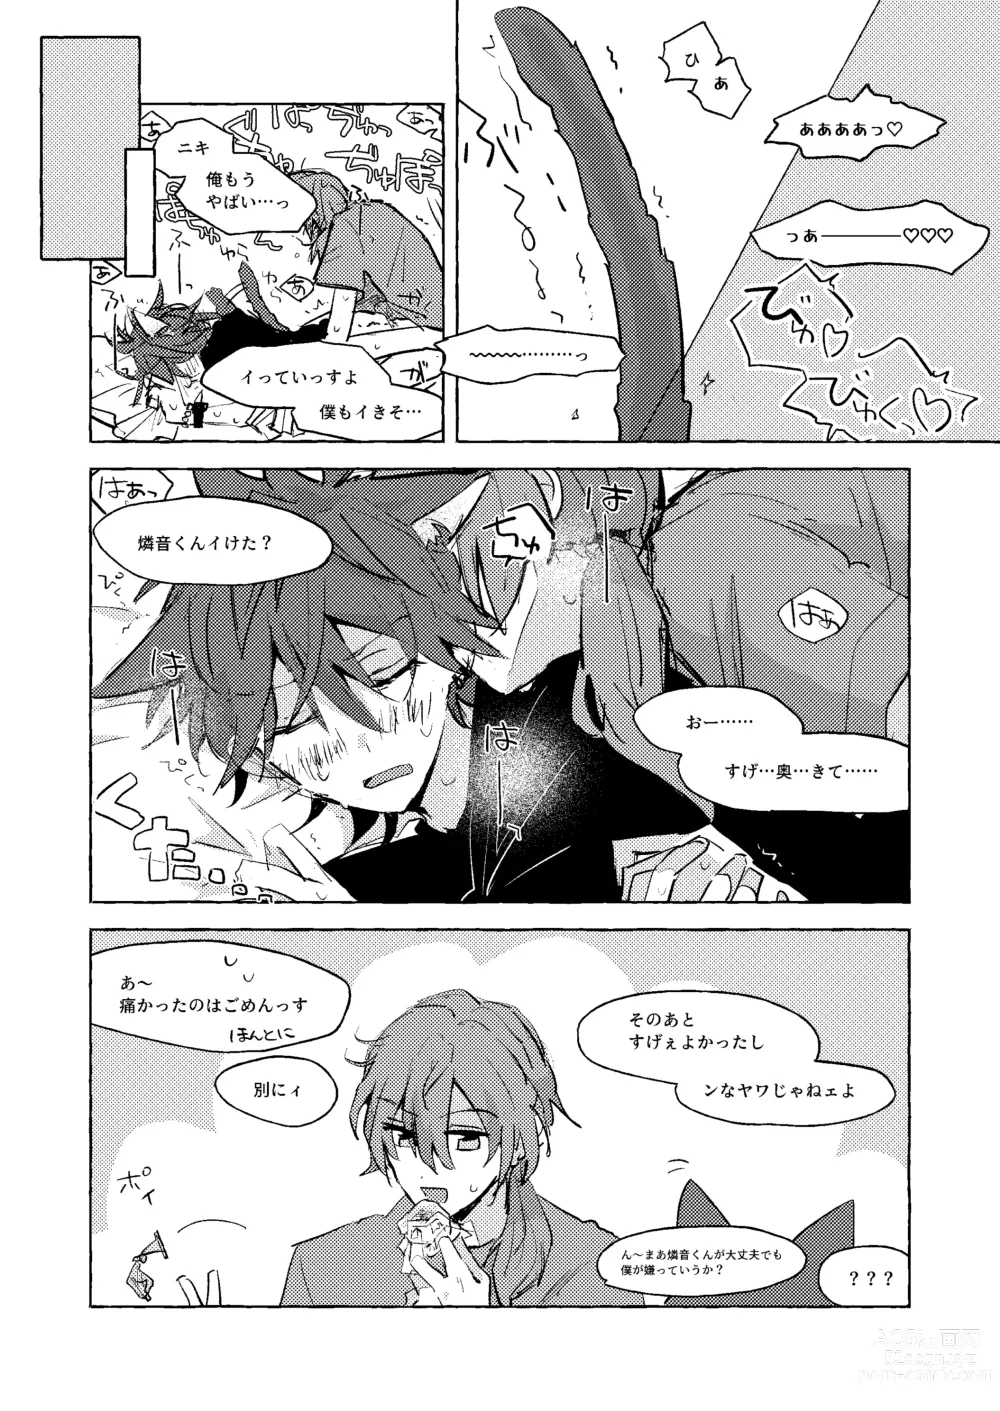 Page 13 of doujinshi Neko Hon